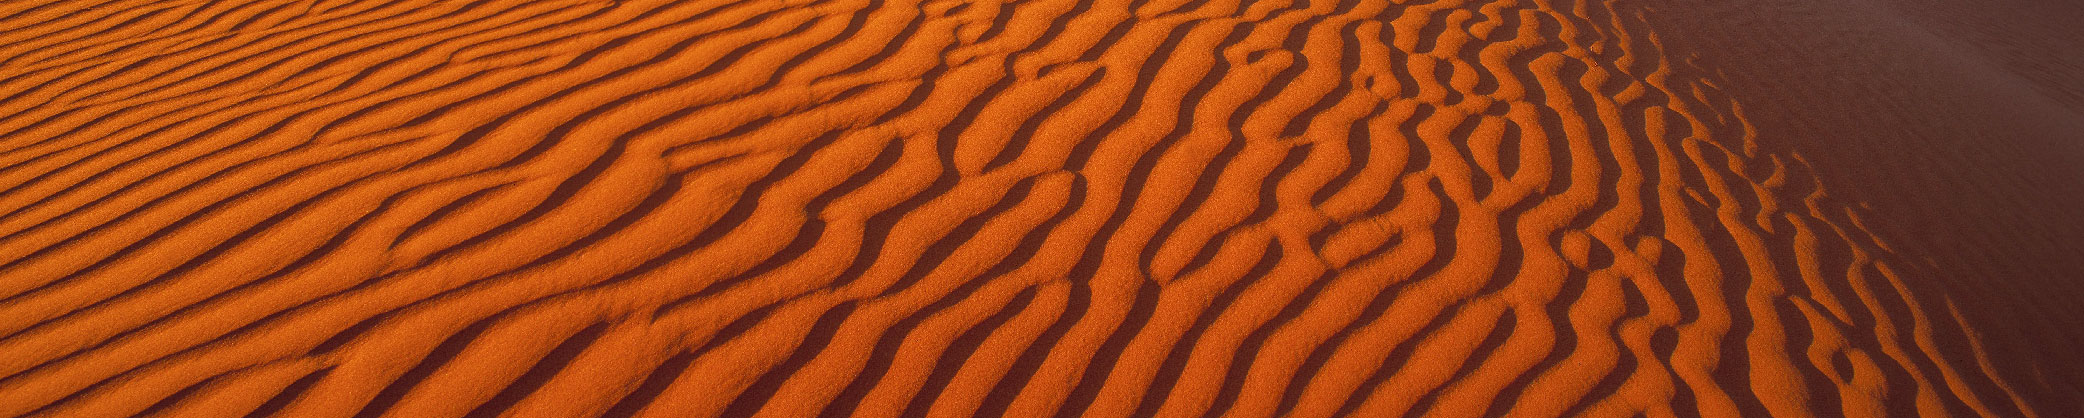 Simpson Desert landscape sand